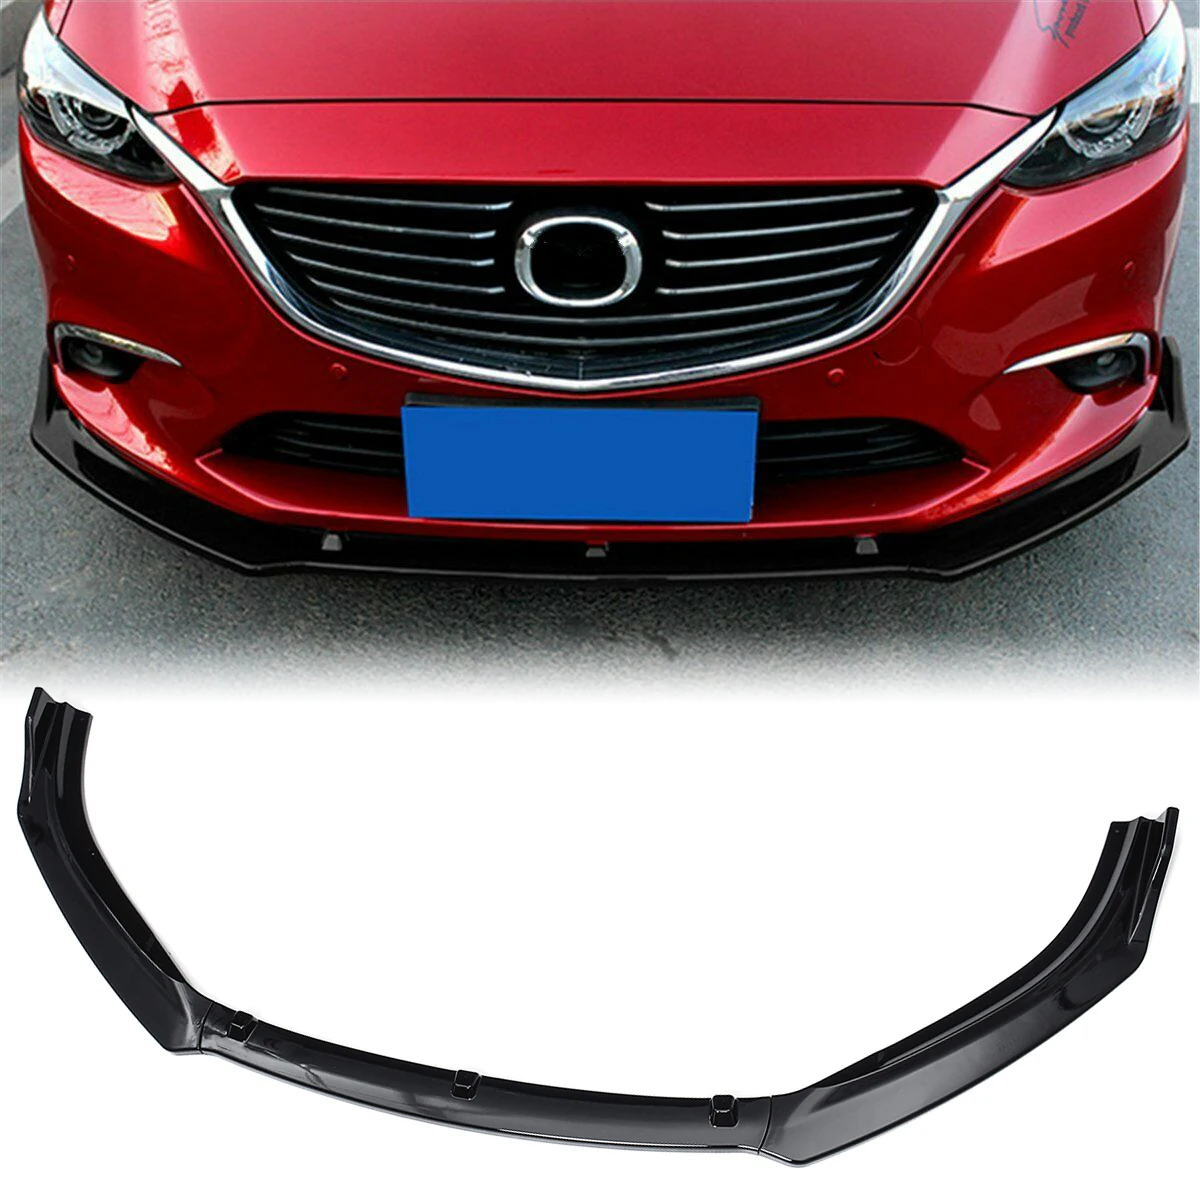 Front Bumper Lip Spoiler Side Splitter Body Kit Protection For Mazda 6 Atenza 2014 - 2018 Car Accessories Black Carbon Look